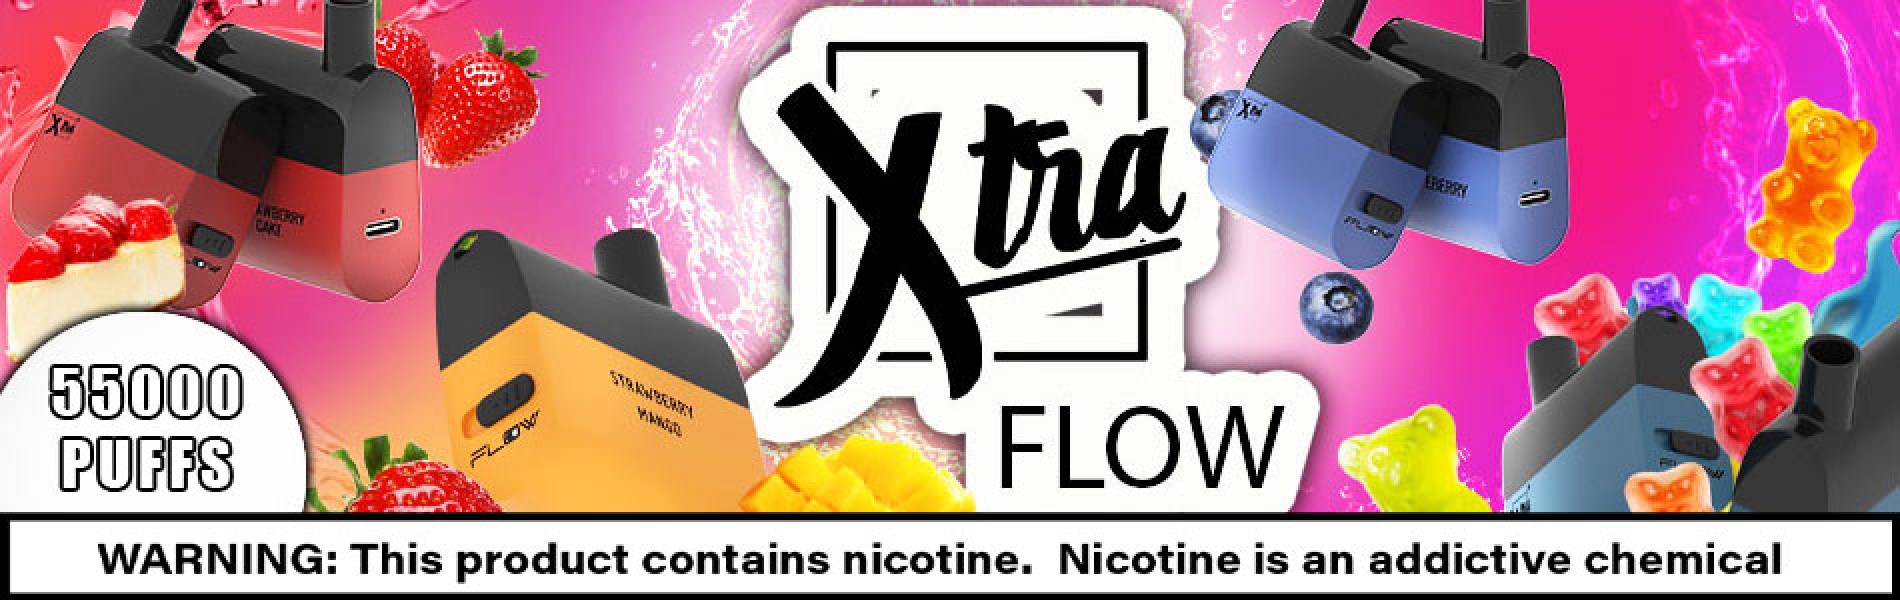 Xtra FLOW Disposables - 5500 Puffs